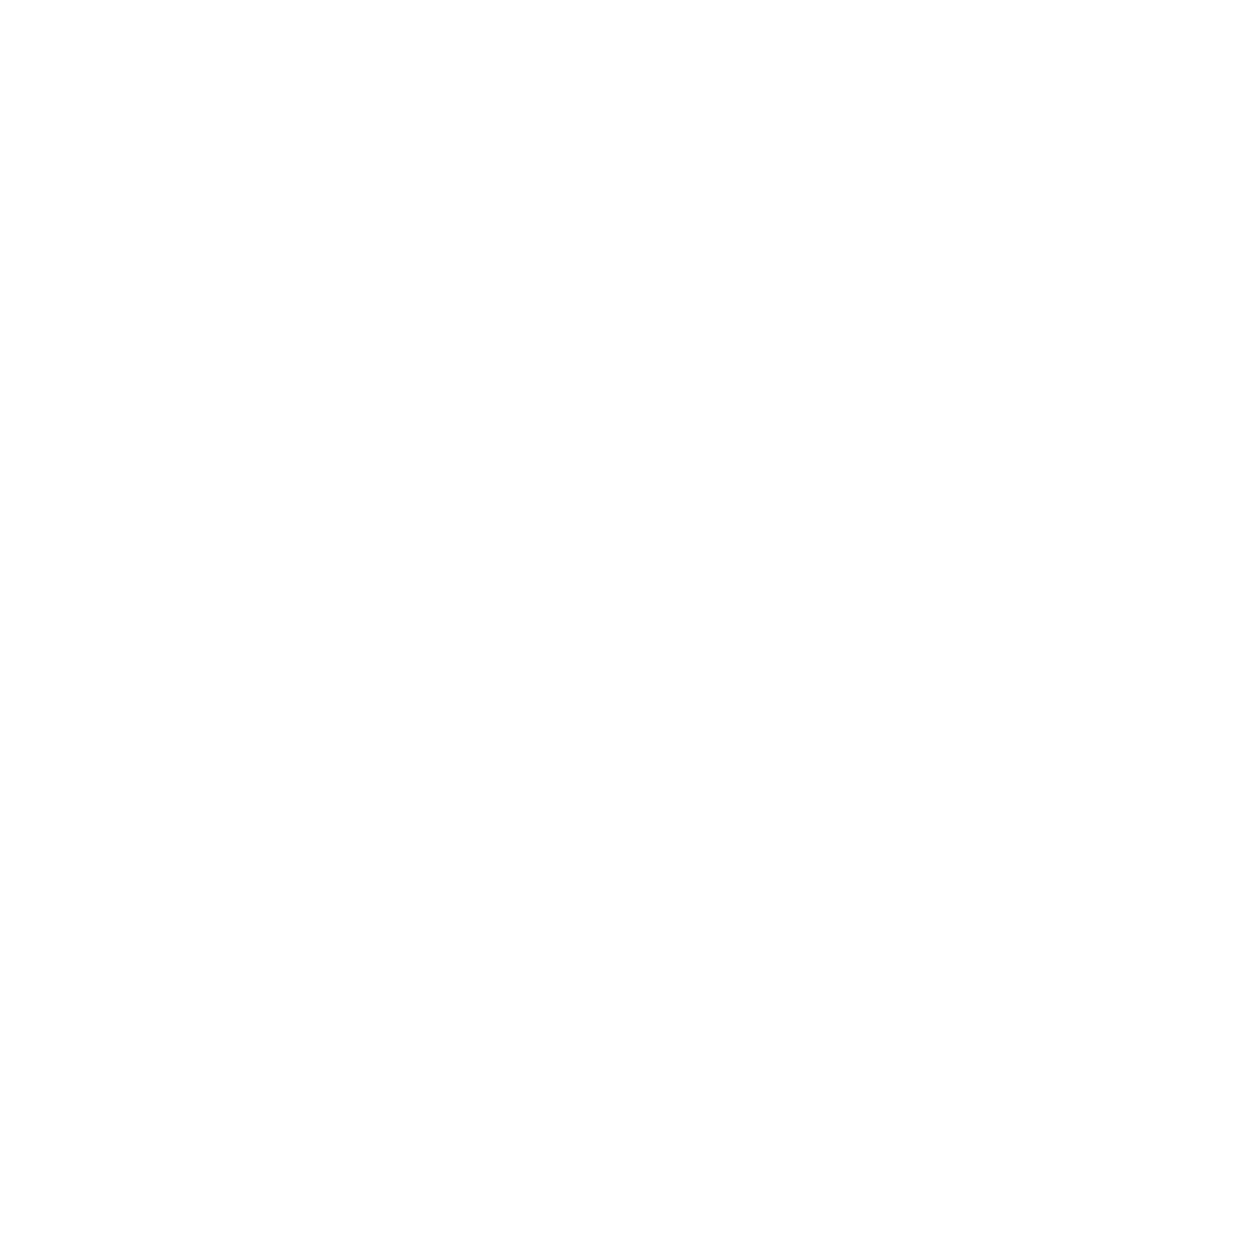 Compa Logo